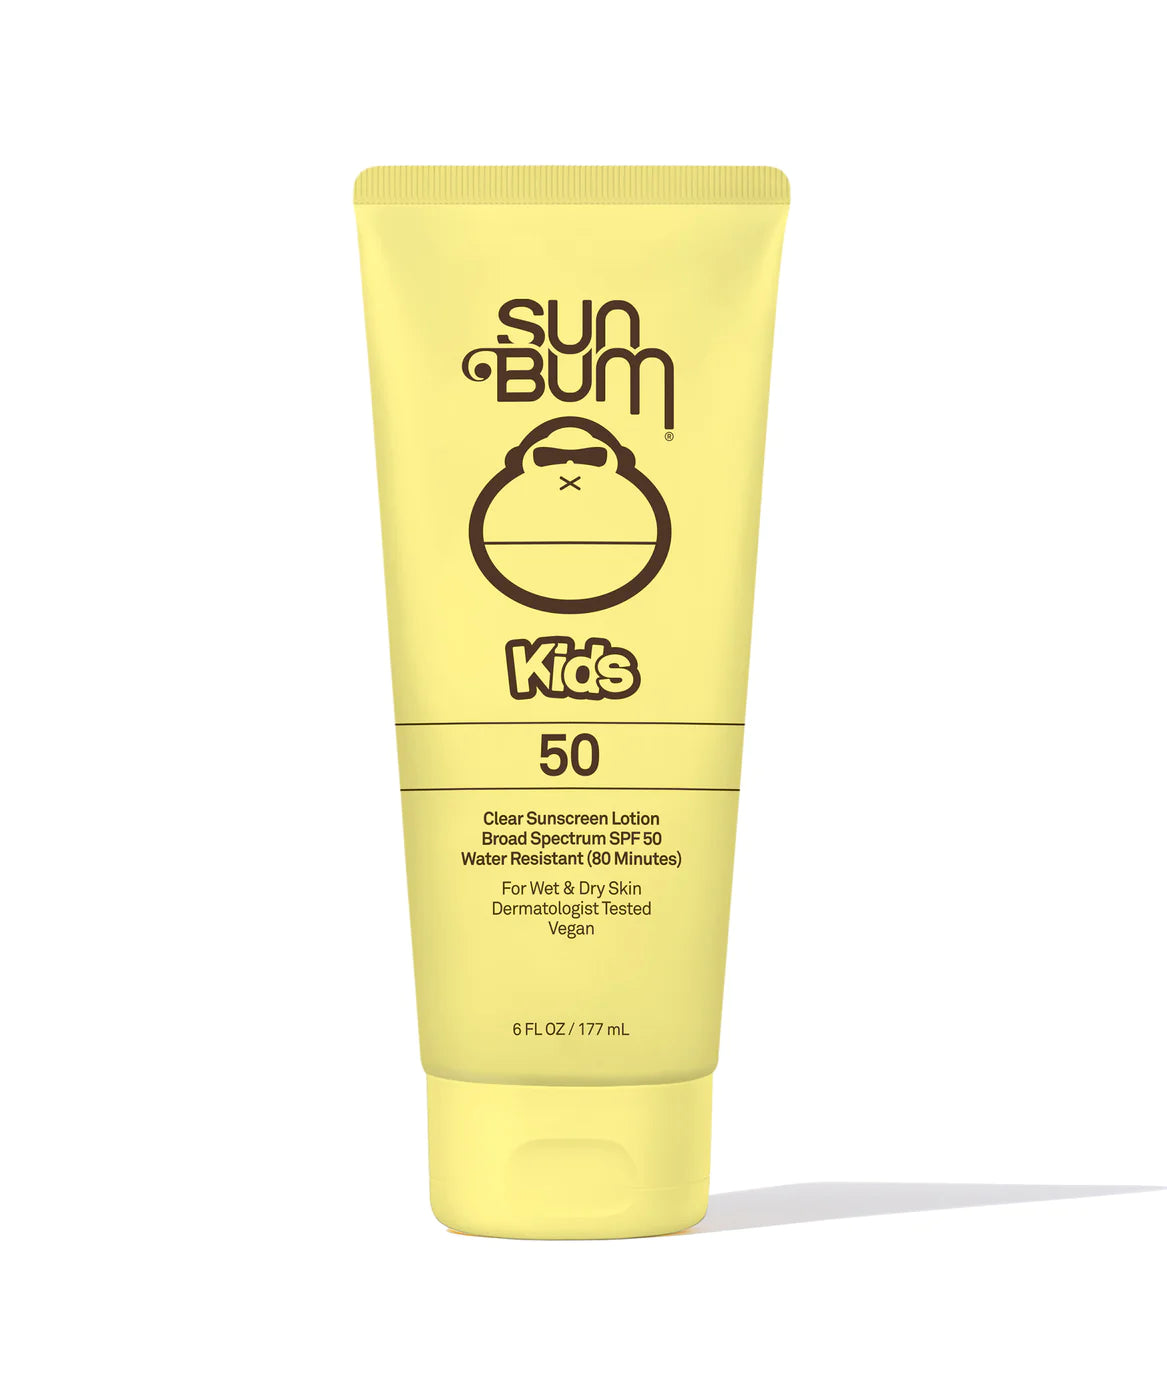 SUNBUM Kids SPF 50 Clear Sunscreen Lotion Default SUN BUM 